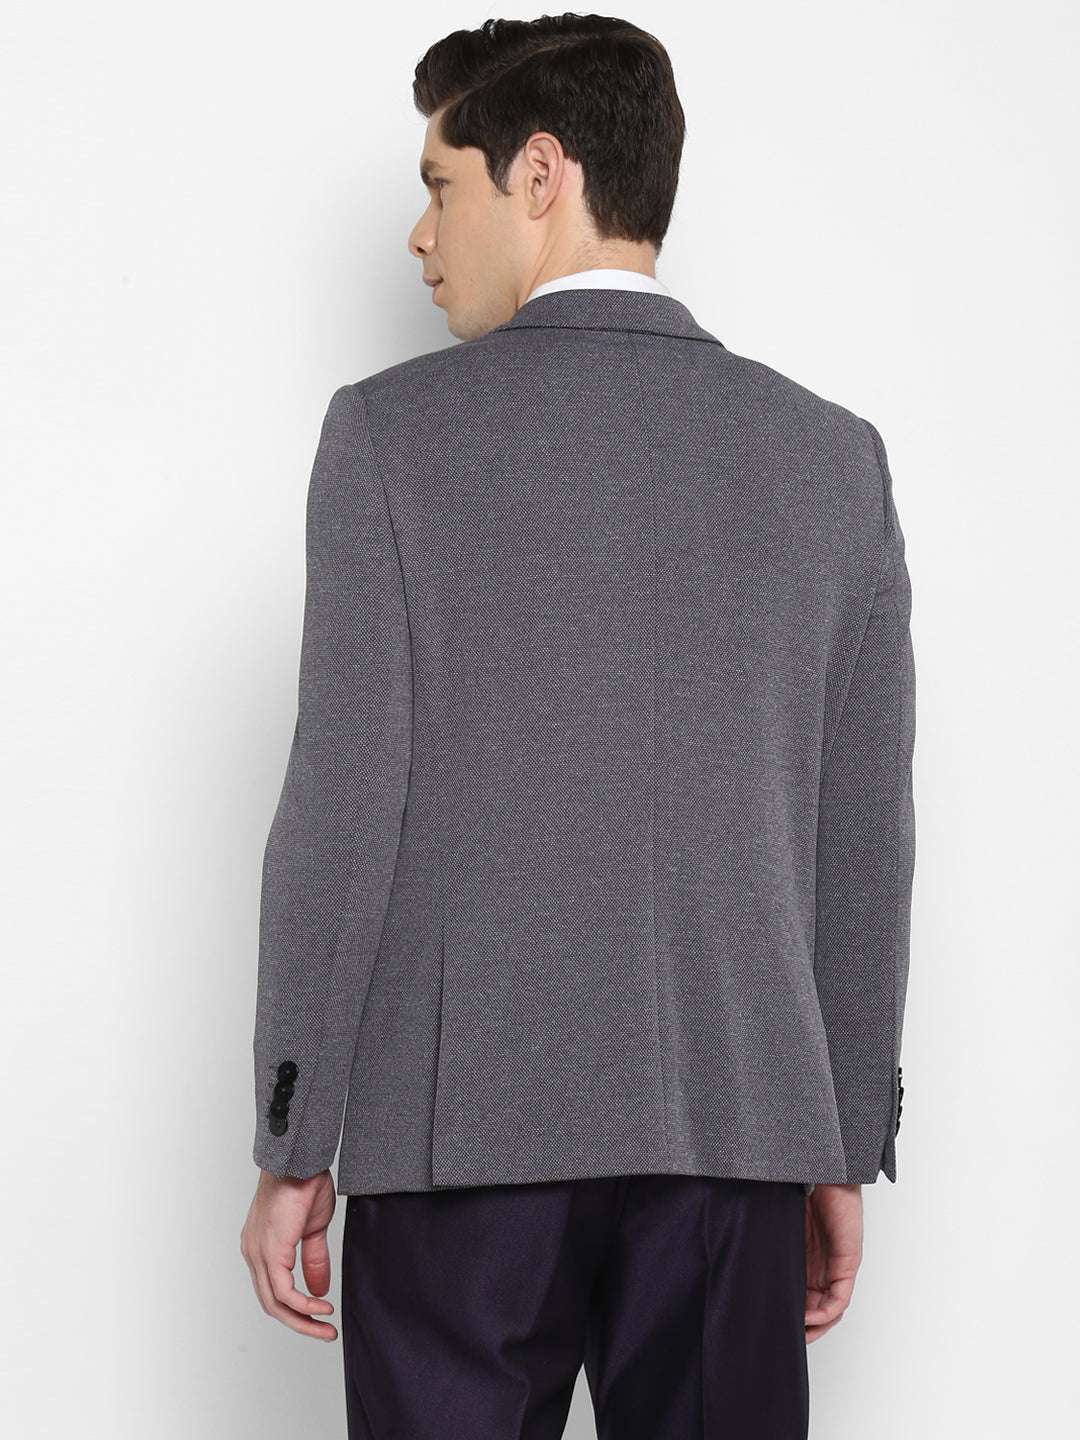 Self Design Grey Blazer for Men